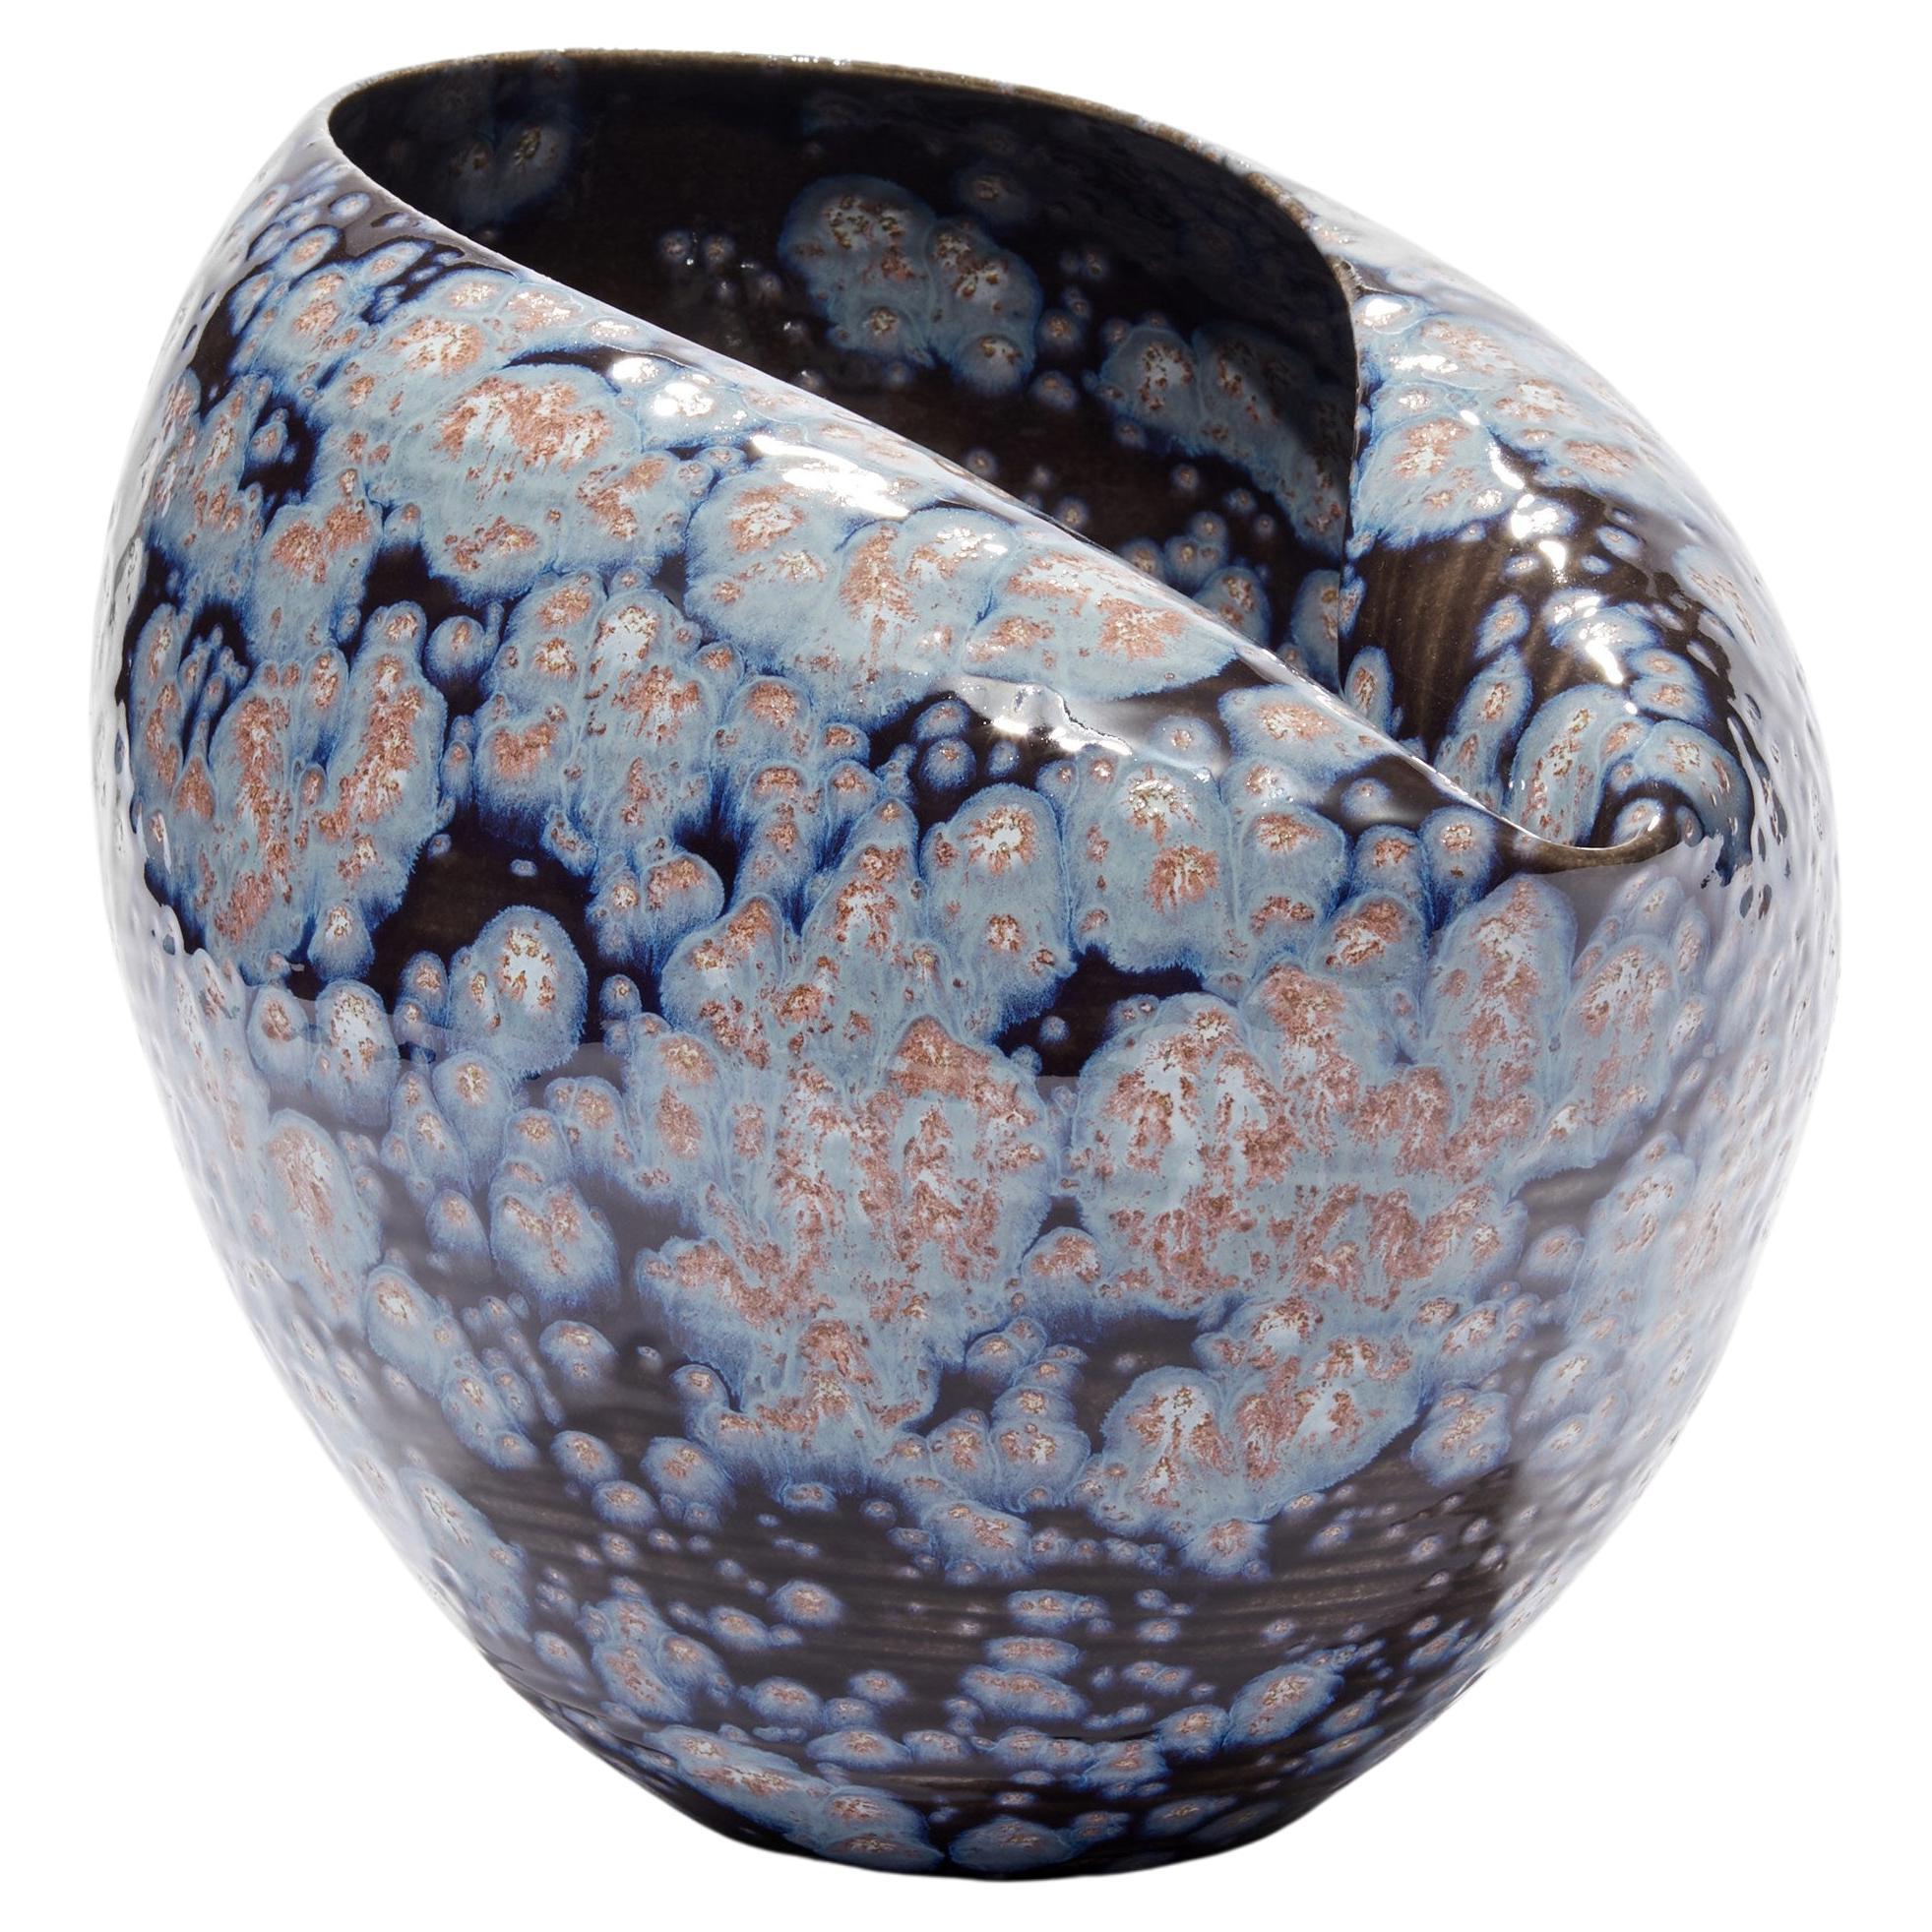 Oval Form in Galactic Blue No 88, a Ceramic Vessel by Nicholas Arroyave-Portela